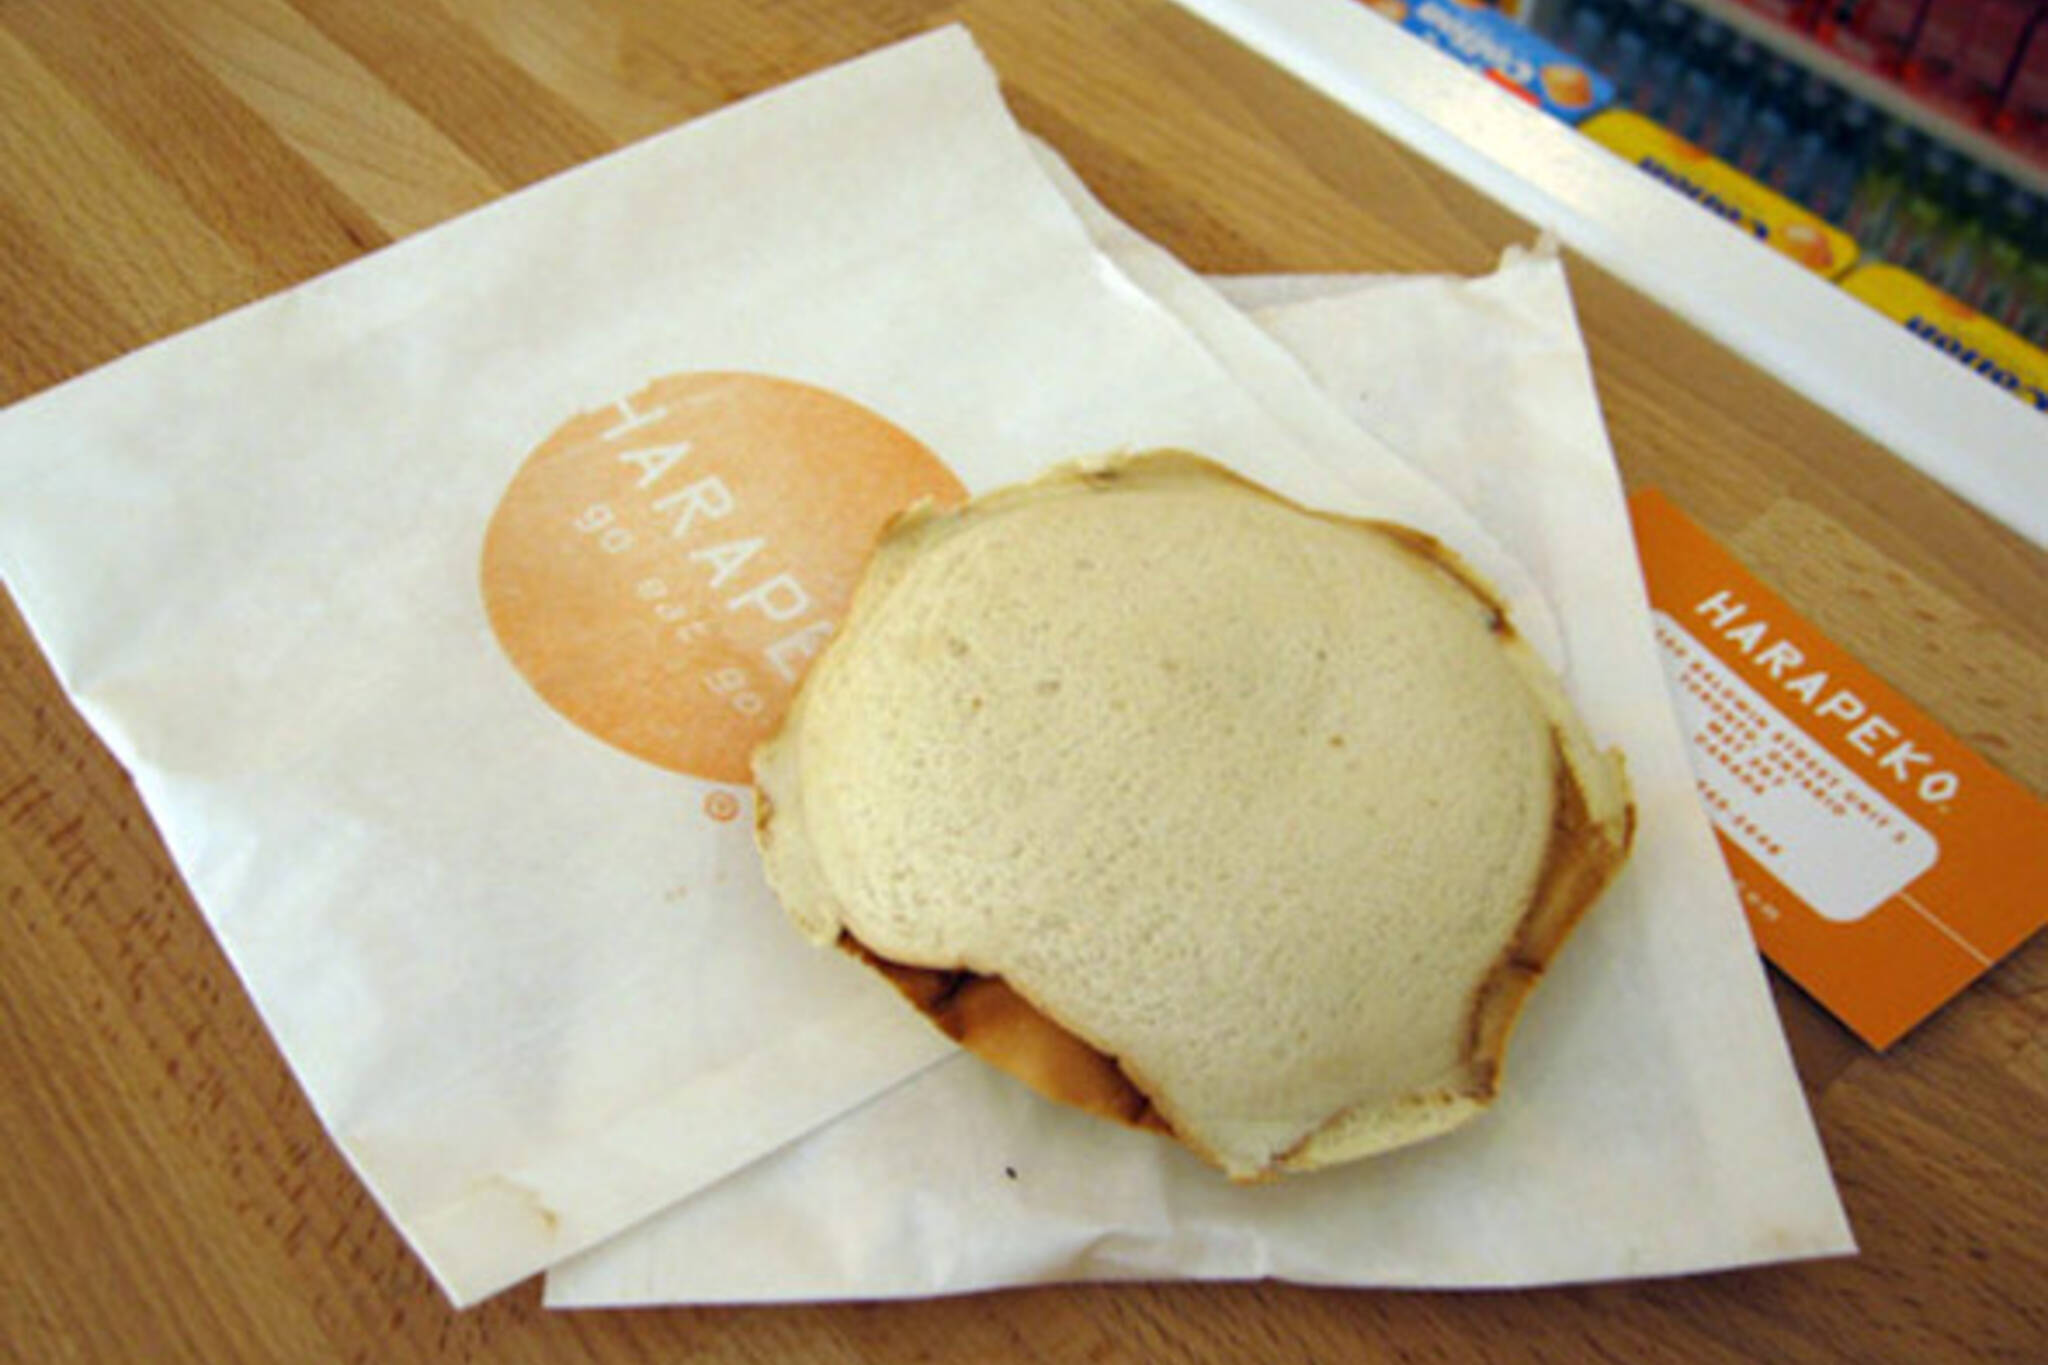 Japanese pocket sandwich